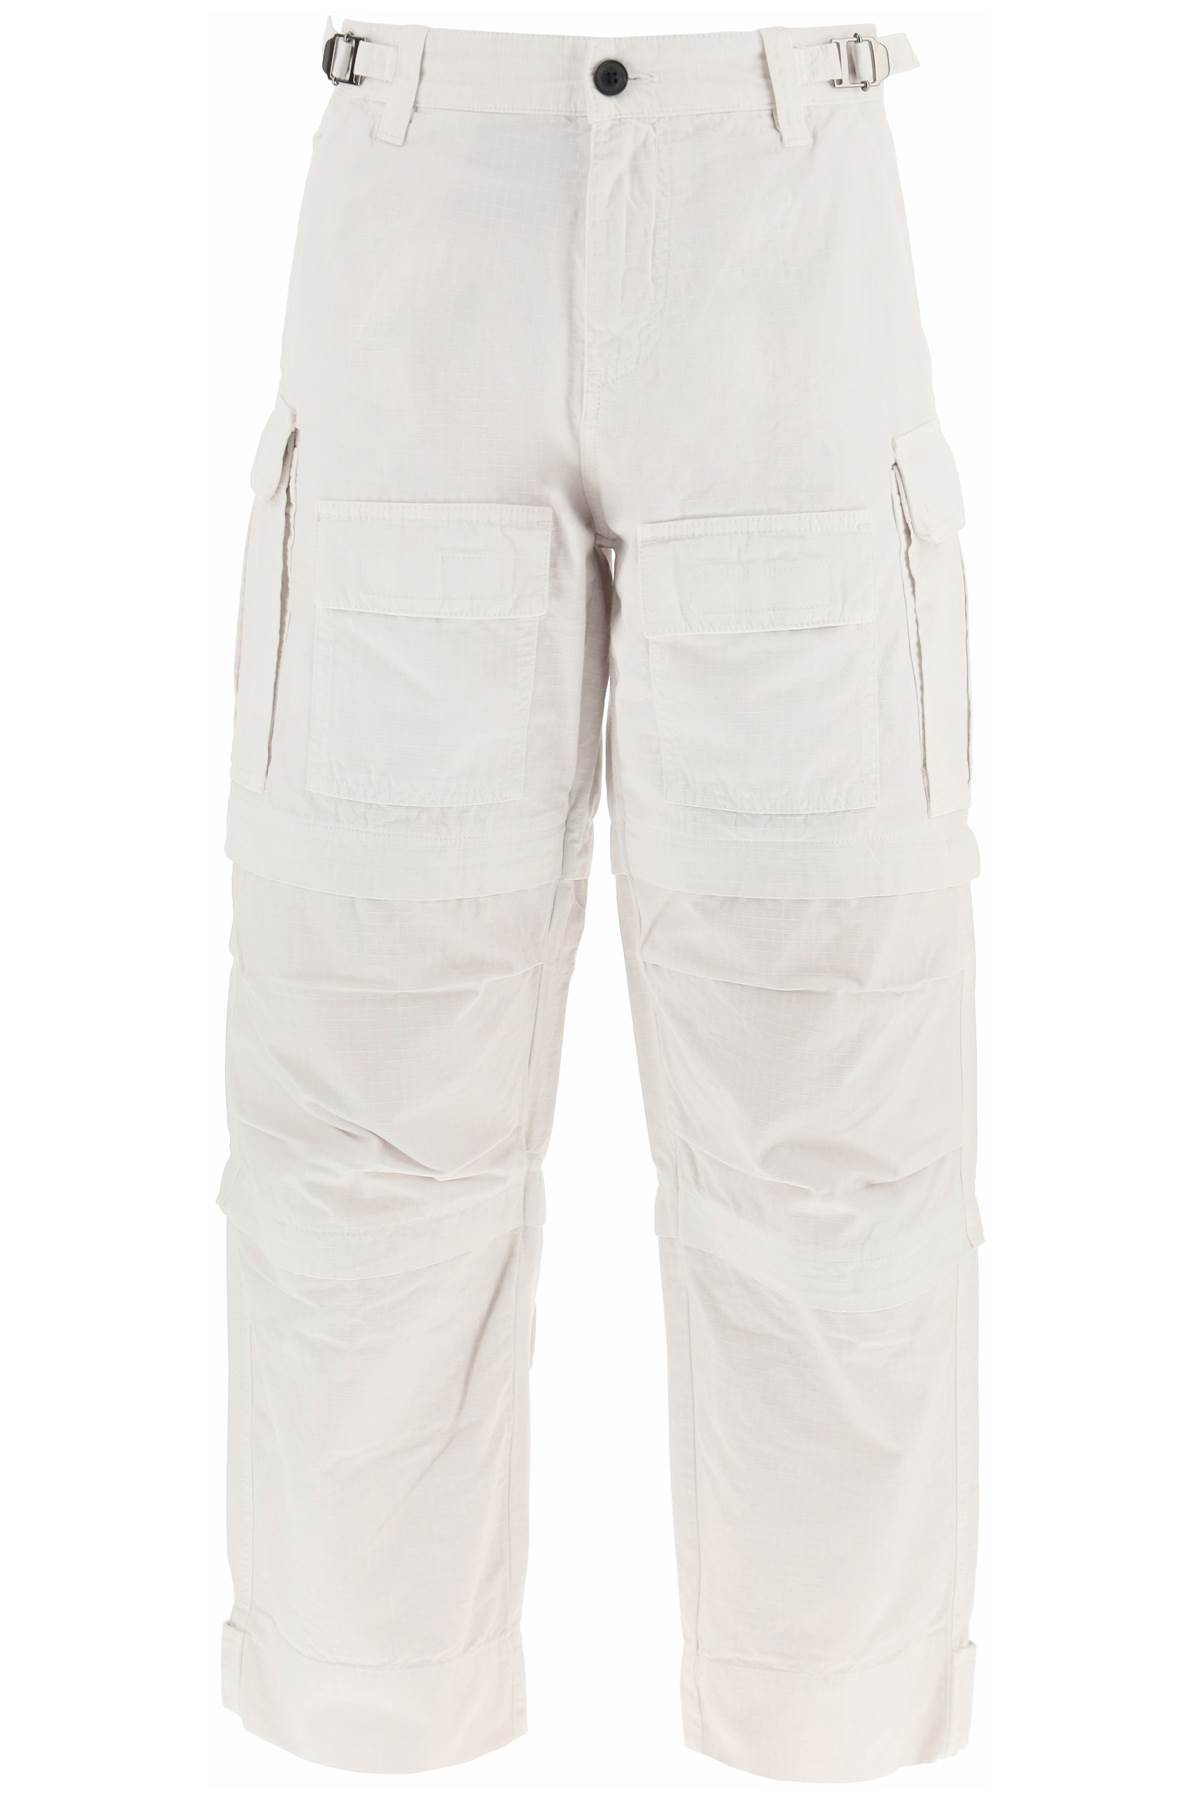 DARKPARK DARKPARK 'julia' ripstop cotton cargo pants